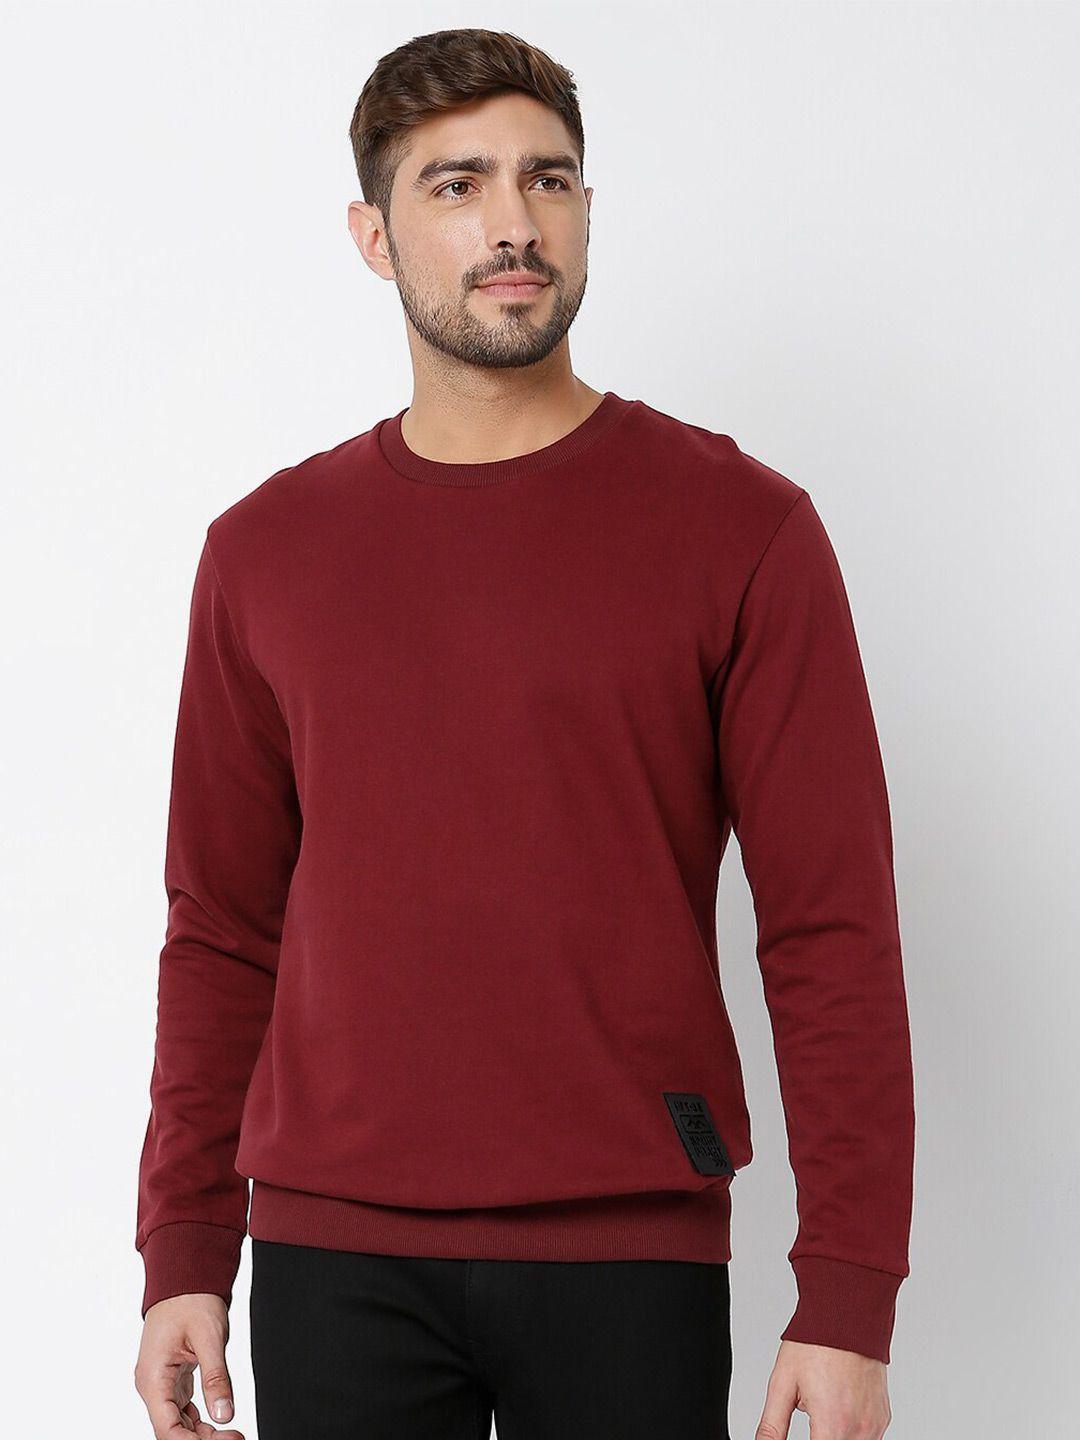 mufti slim fit full sleeves pure cotton sweatshirt